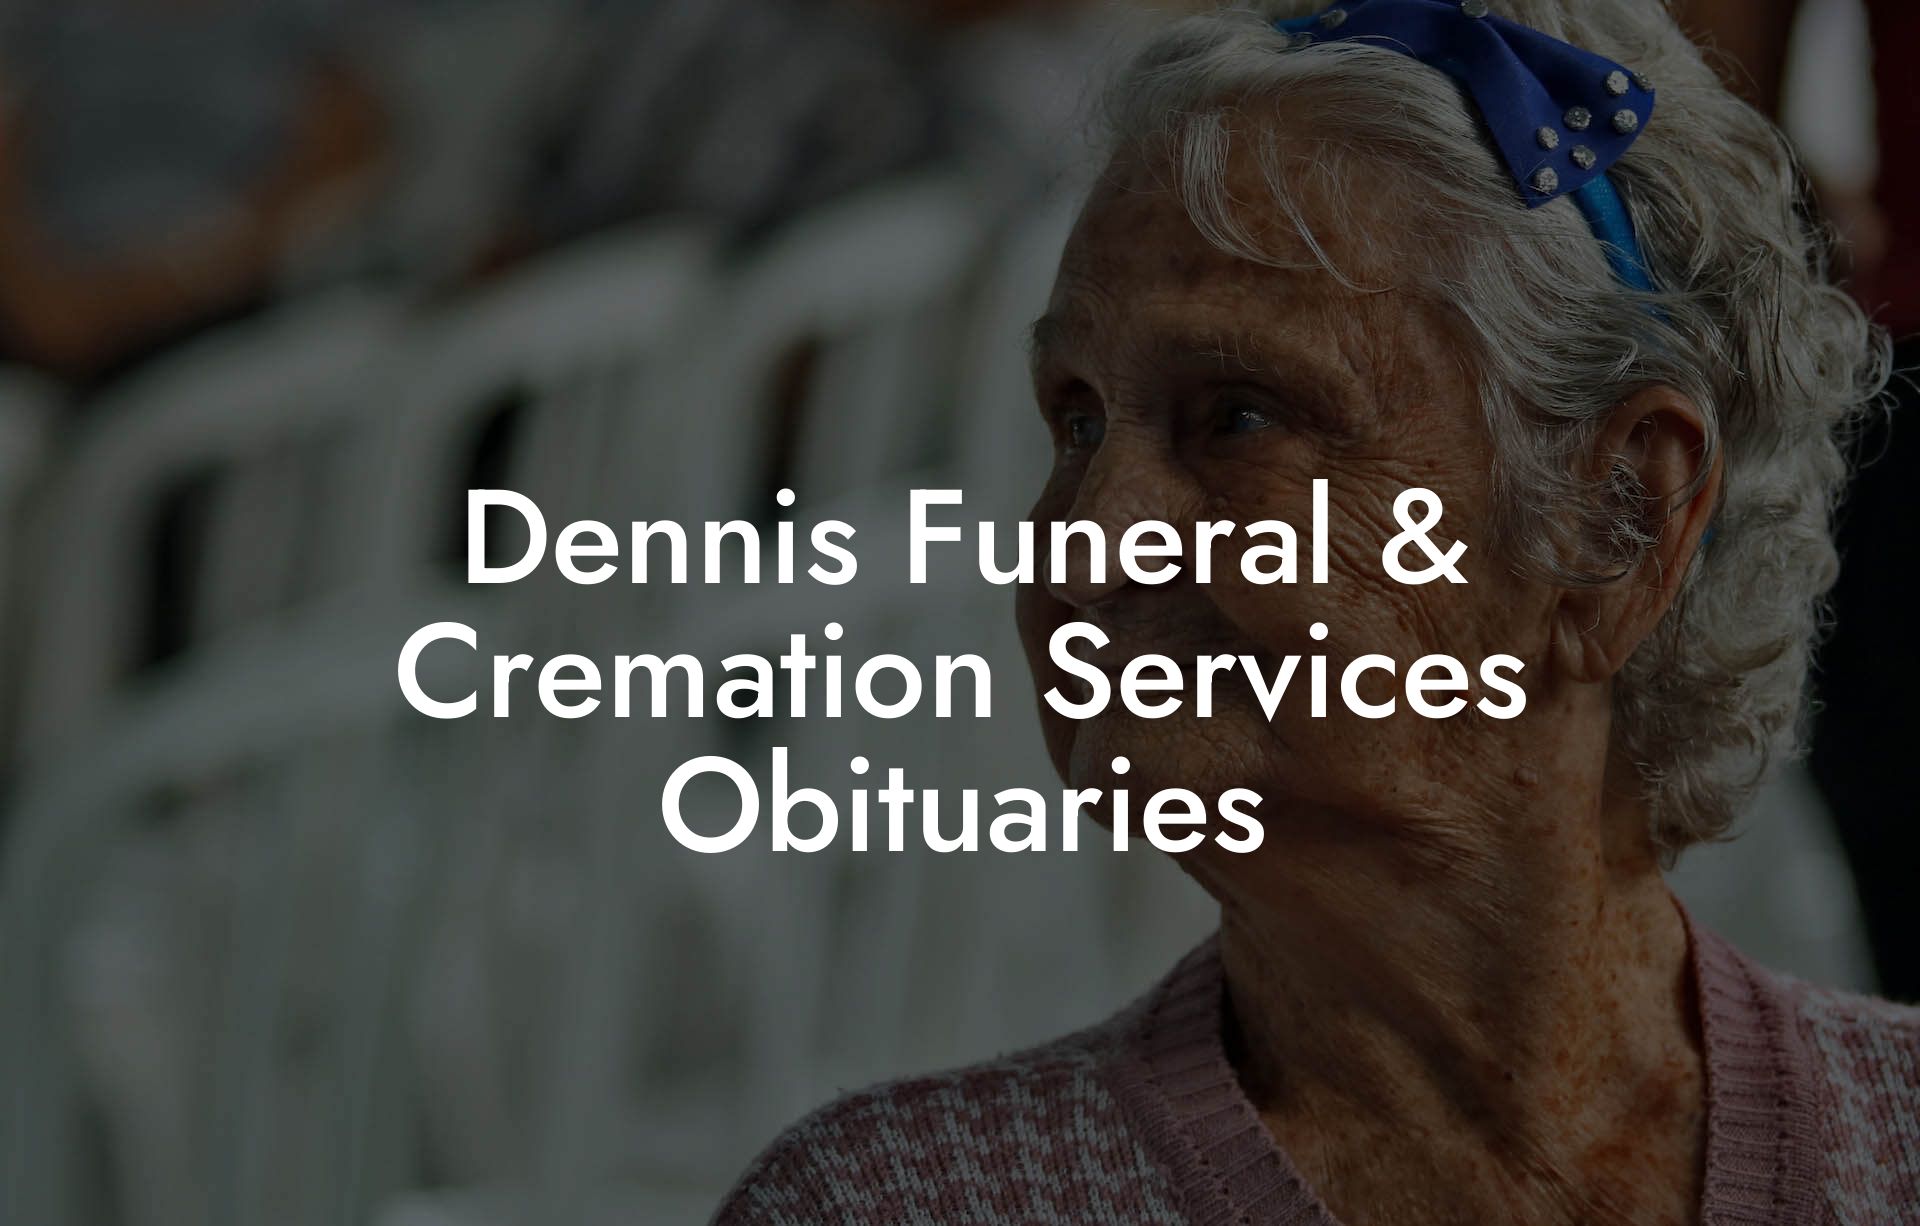 Dennis Funeral & Cremation Services Obituaries